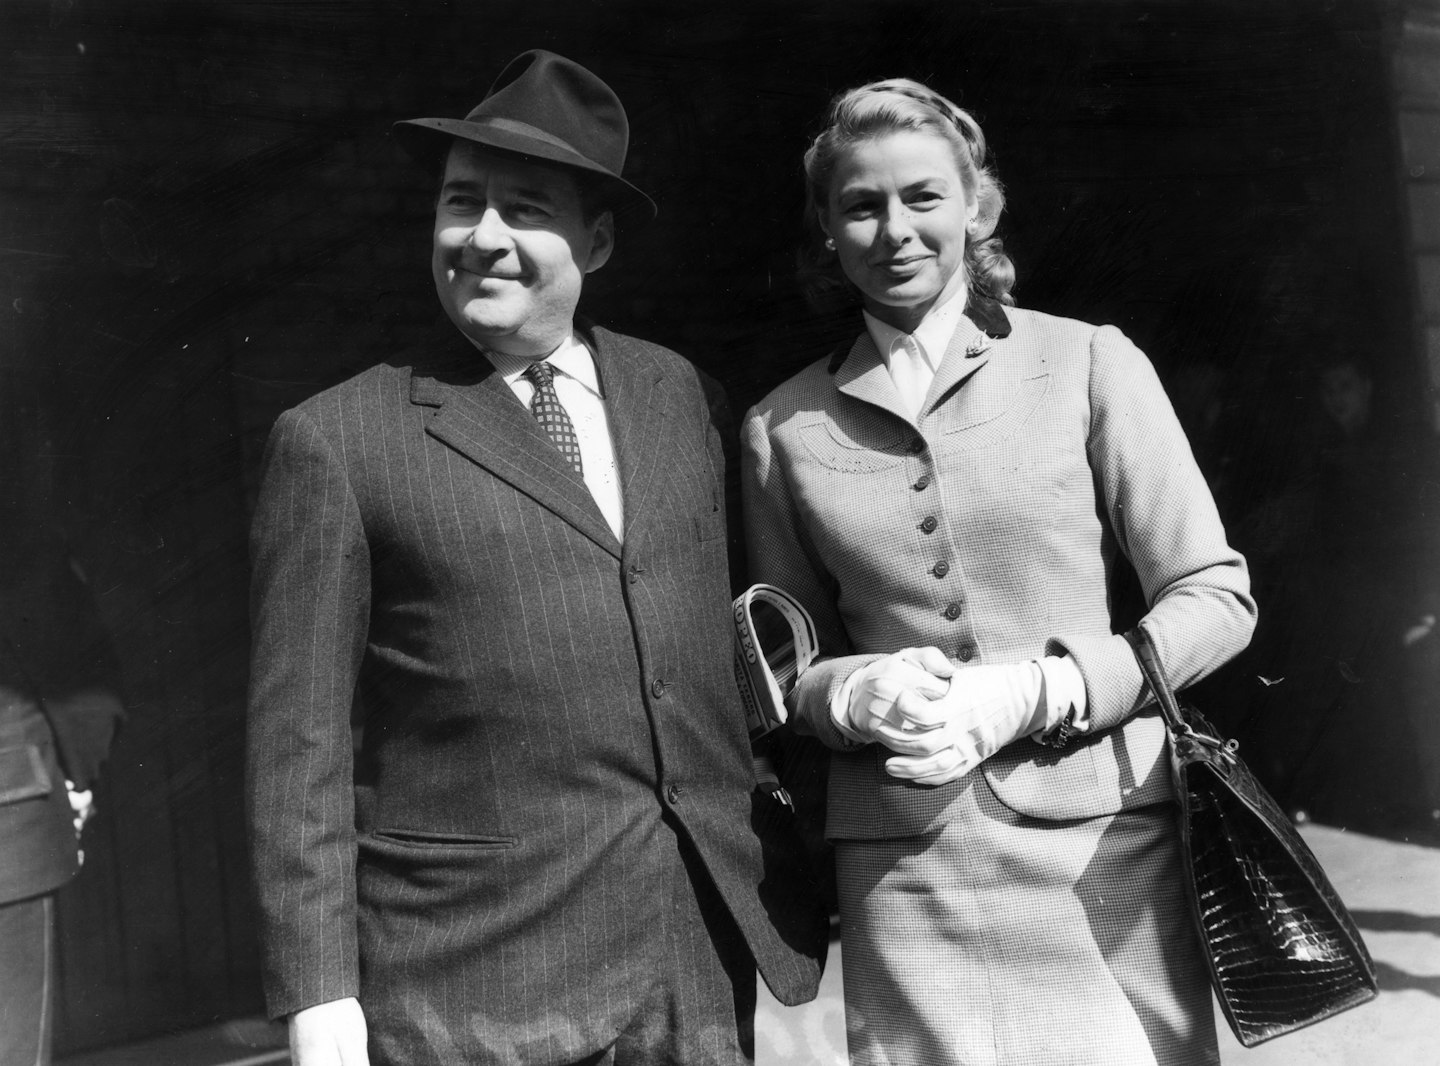 Ingrid Bergman and Roberto Rossellini